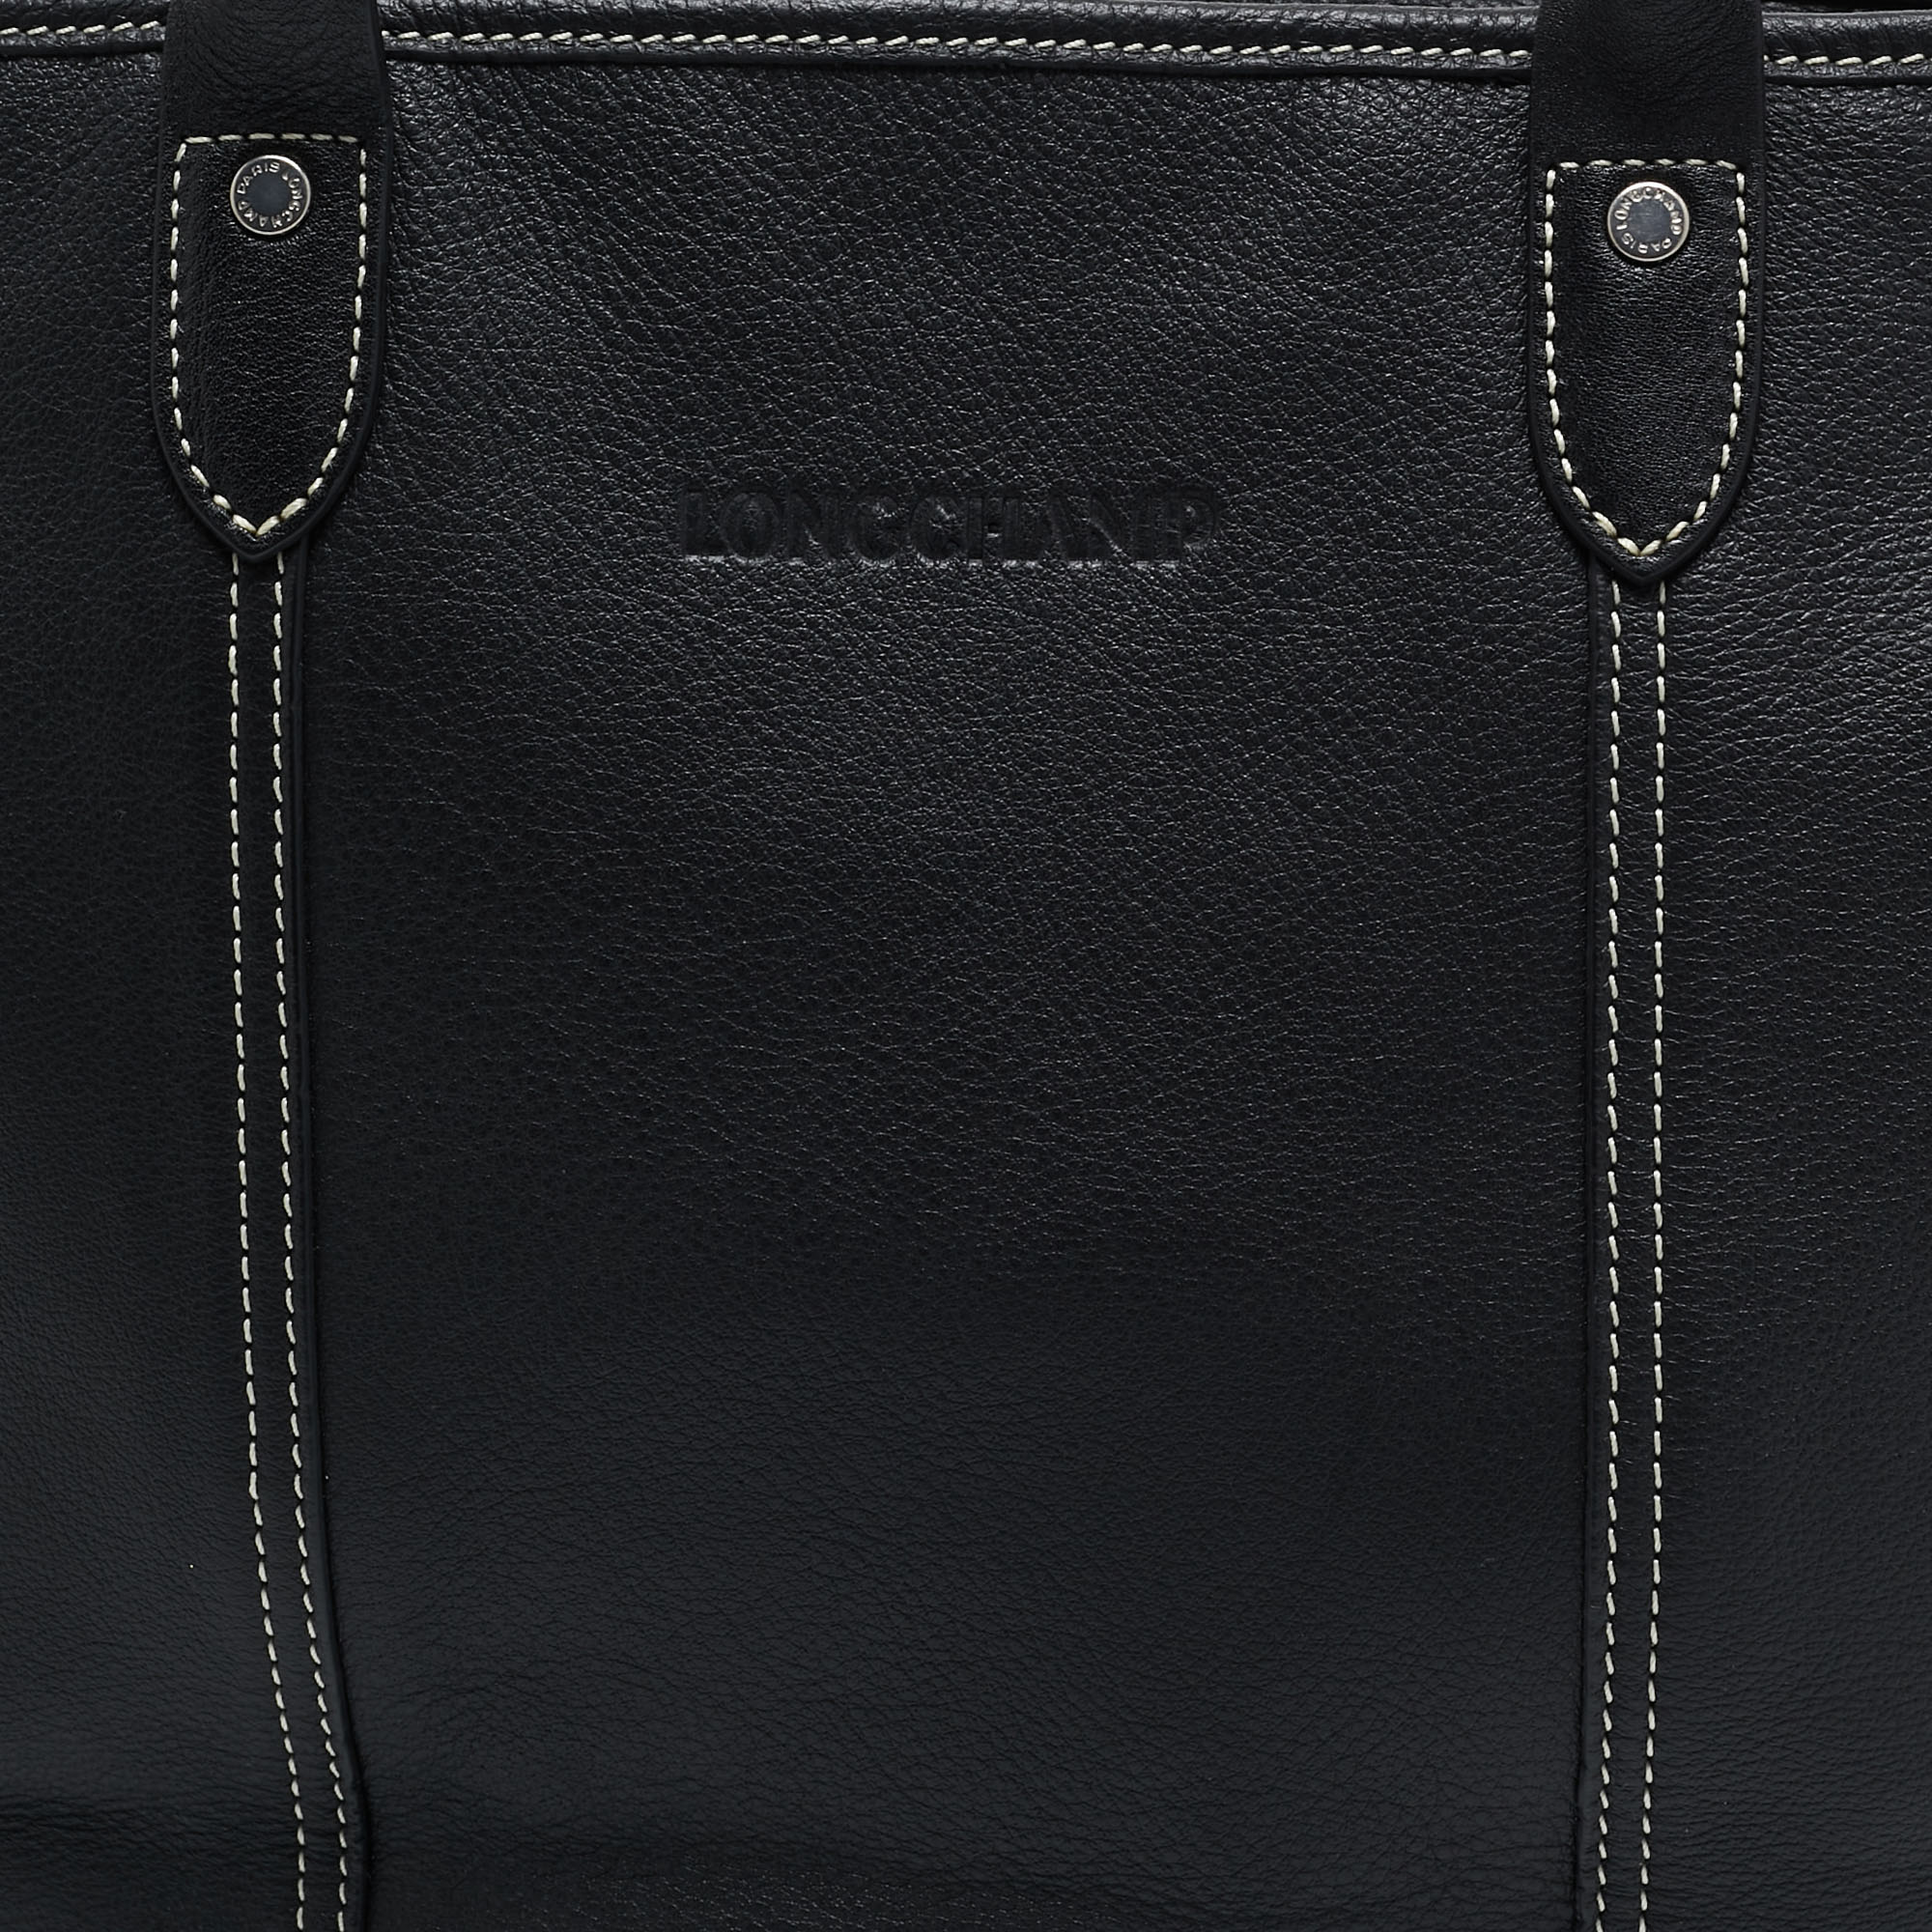 Longchamp Black Leather Shopper Tote